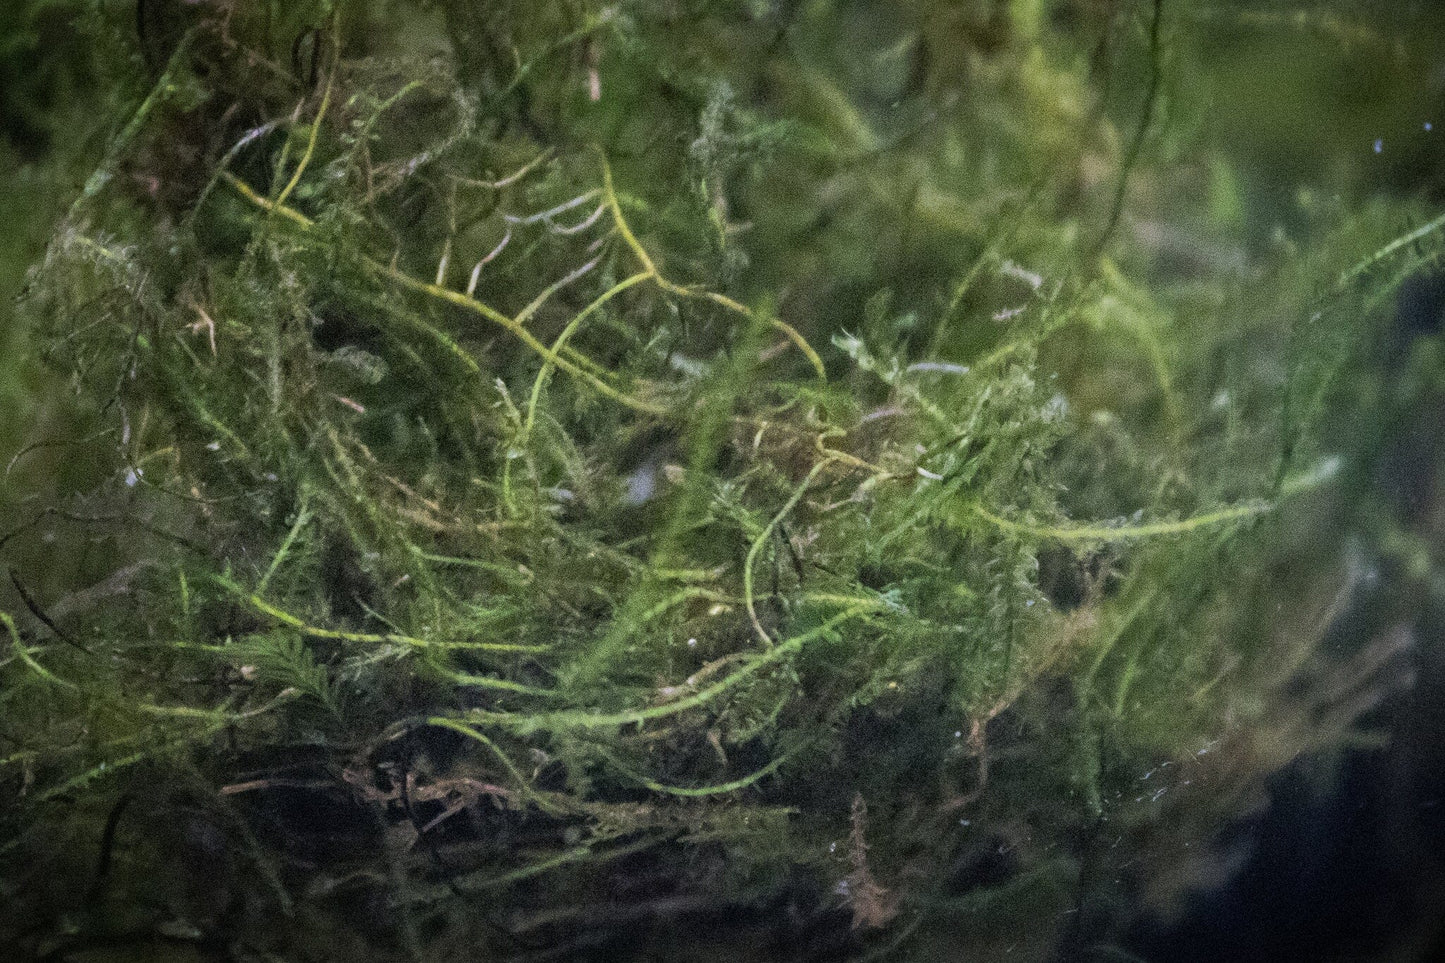 Java Moos (Vesicularia dubyana) 25g